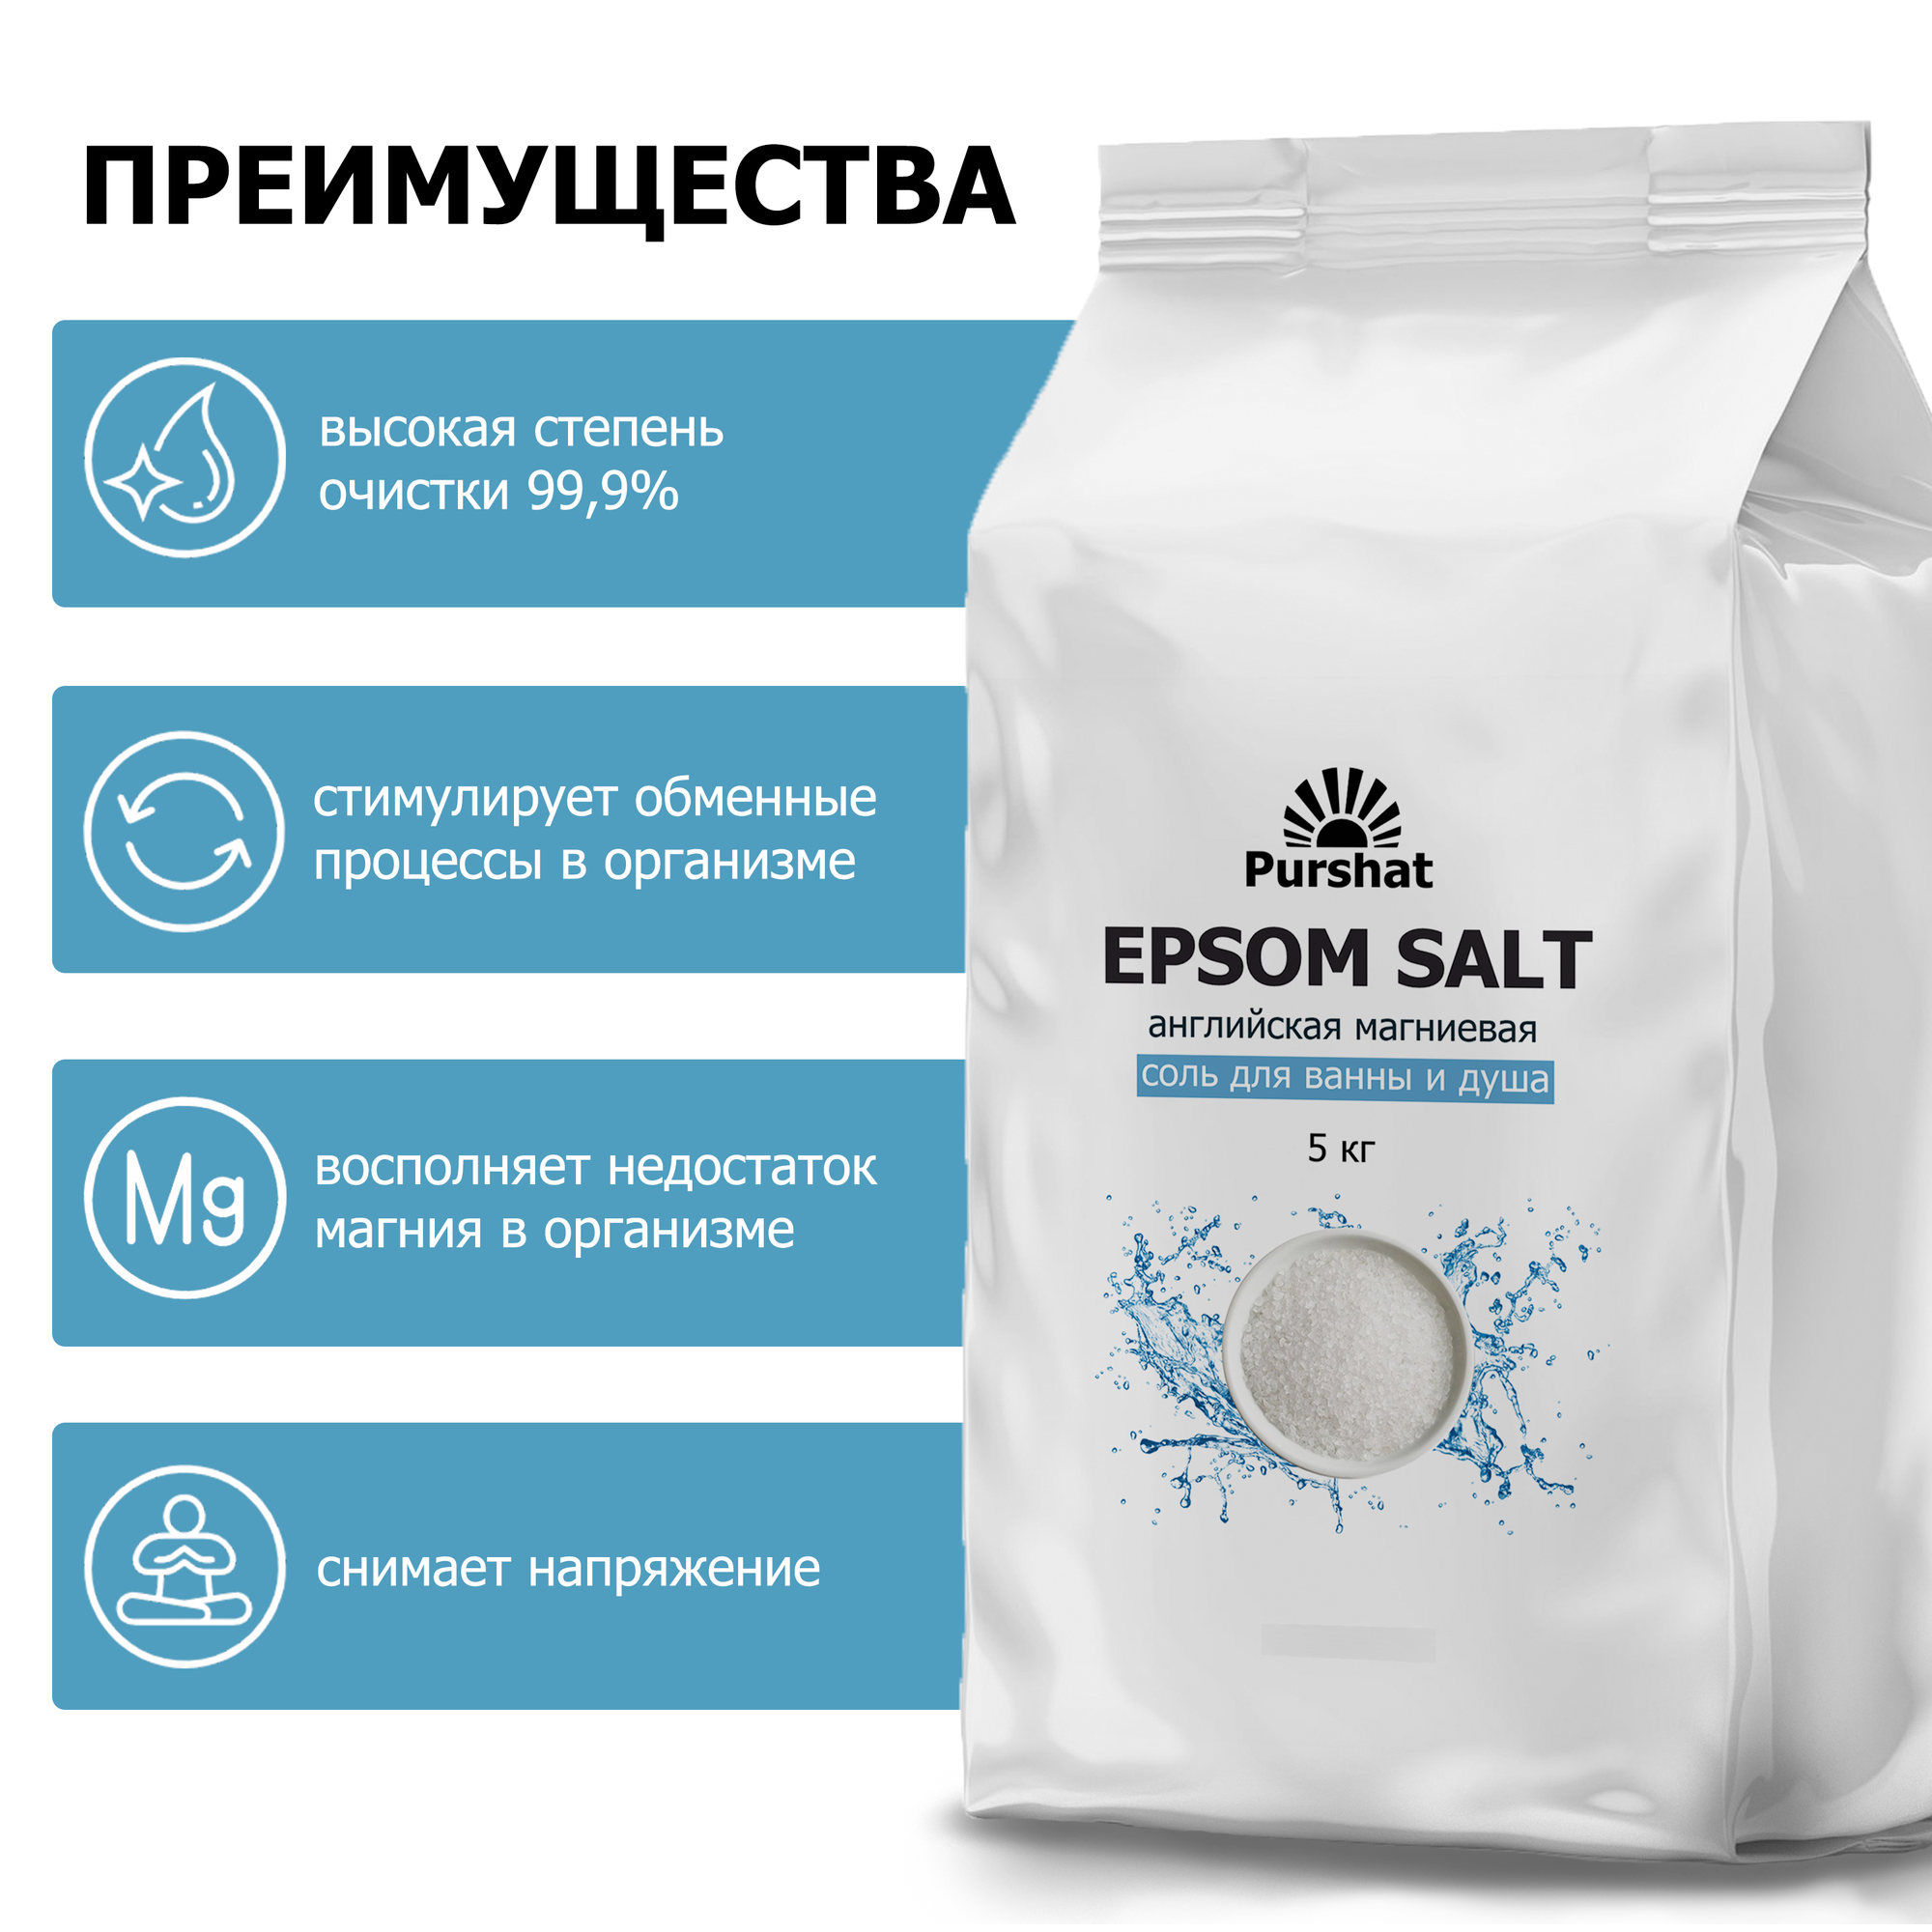 Английская магниевая соль для ванны Epsom Purshat 5 кг